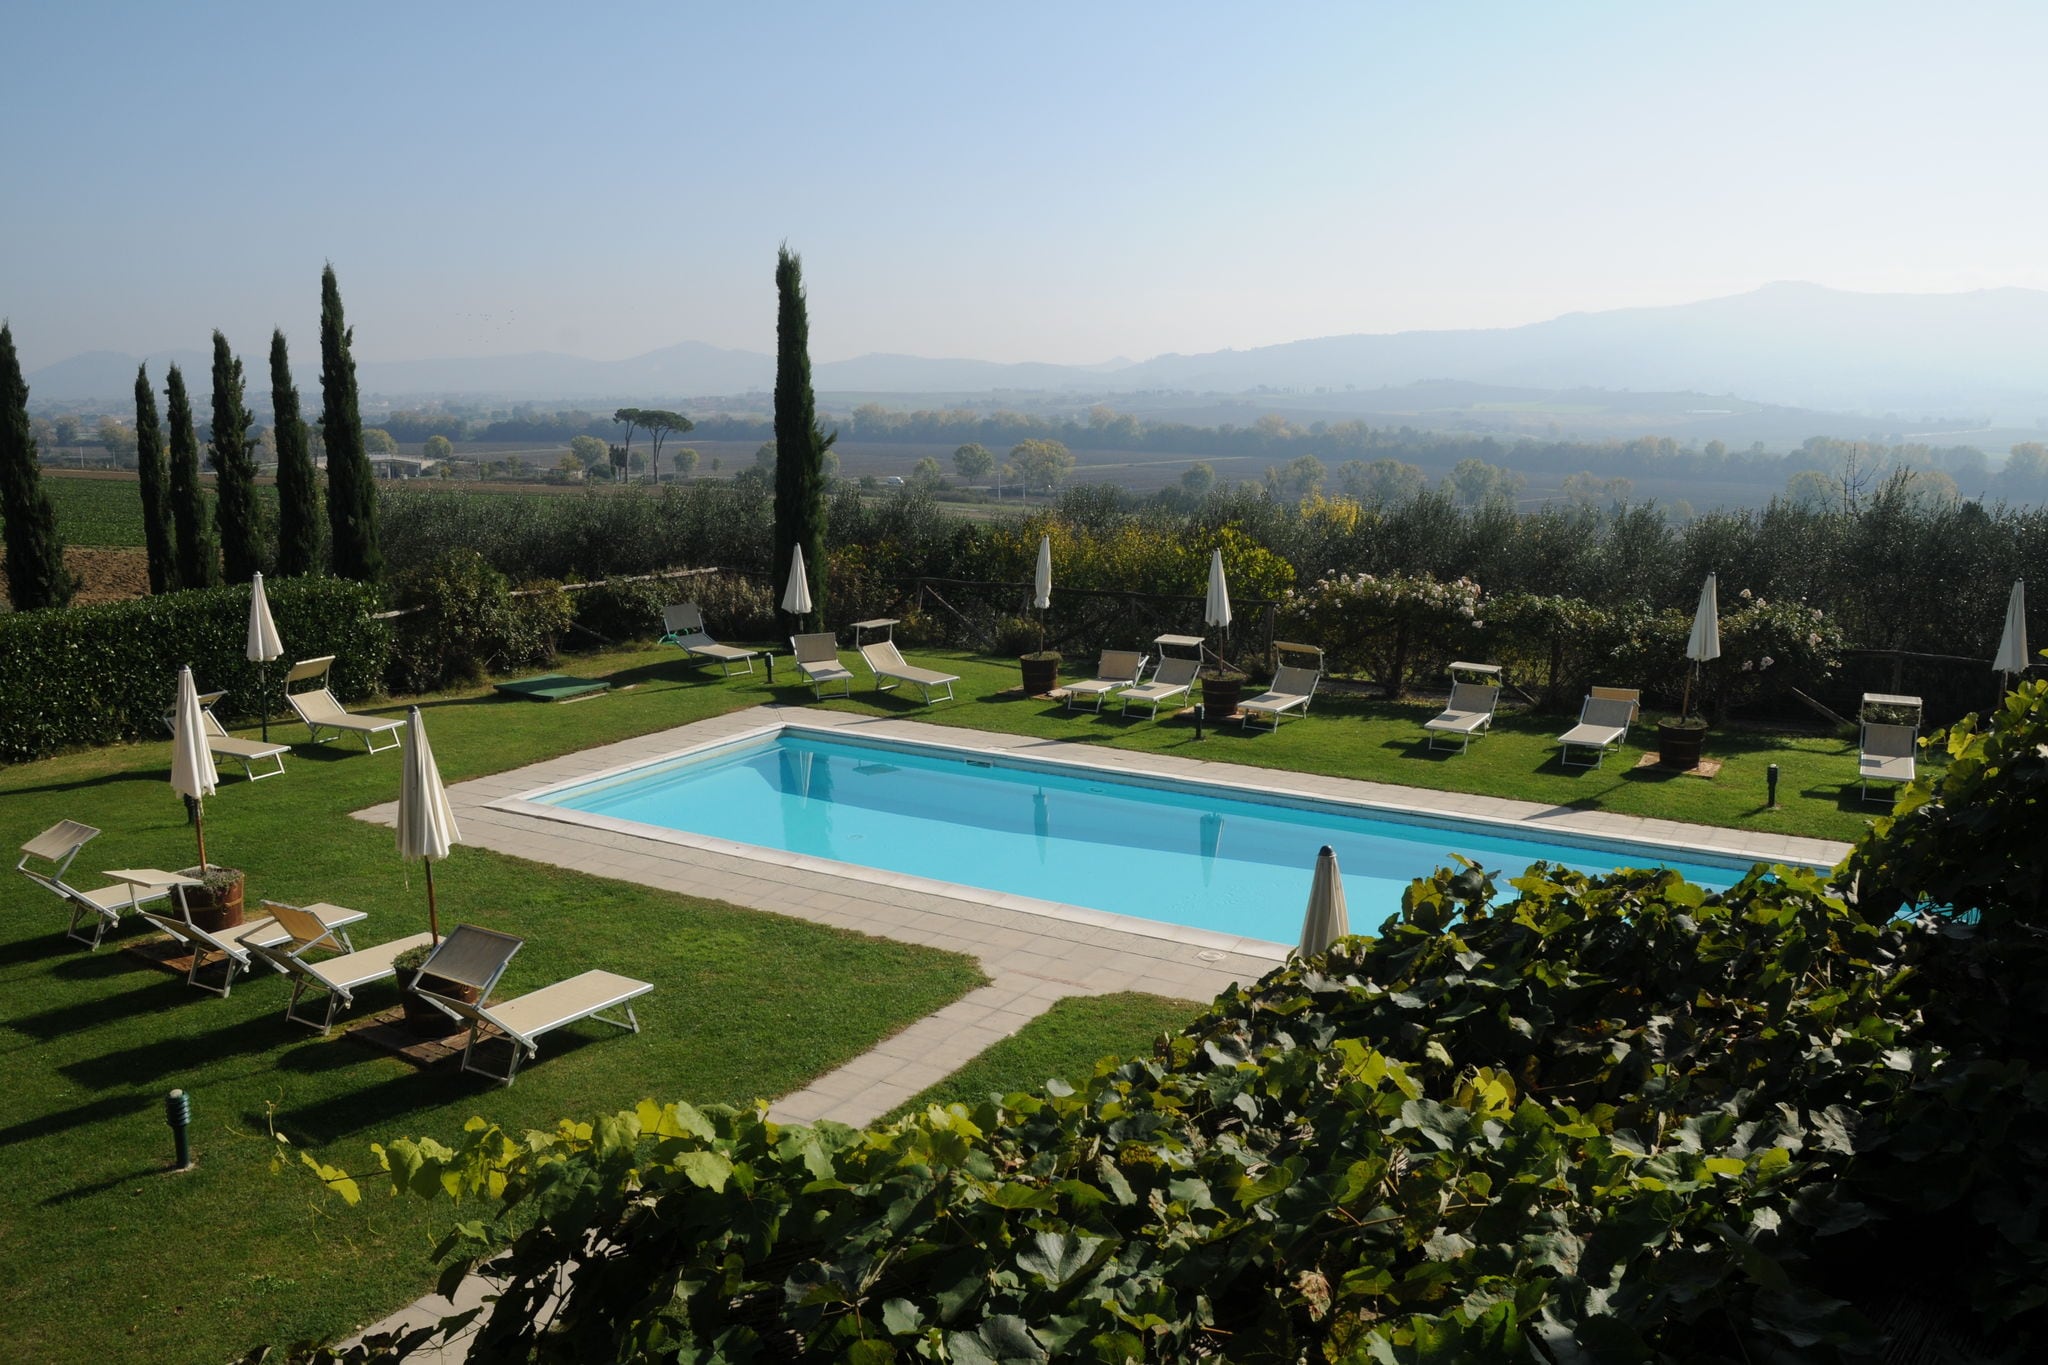 Agriturismo in Castiglione del Lago mit Blick auf den Pool